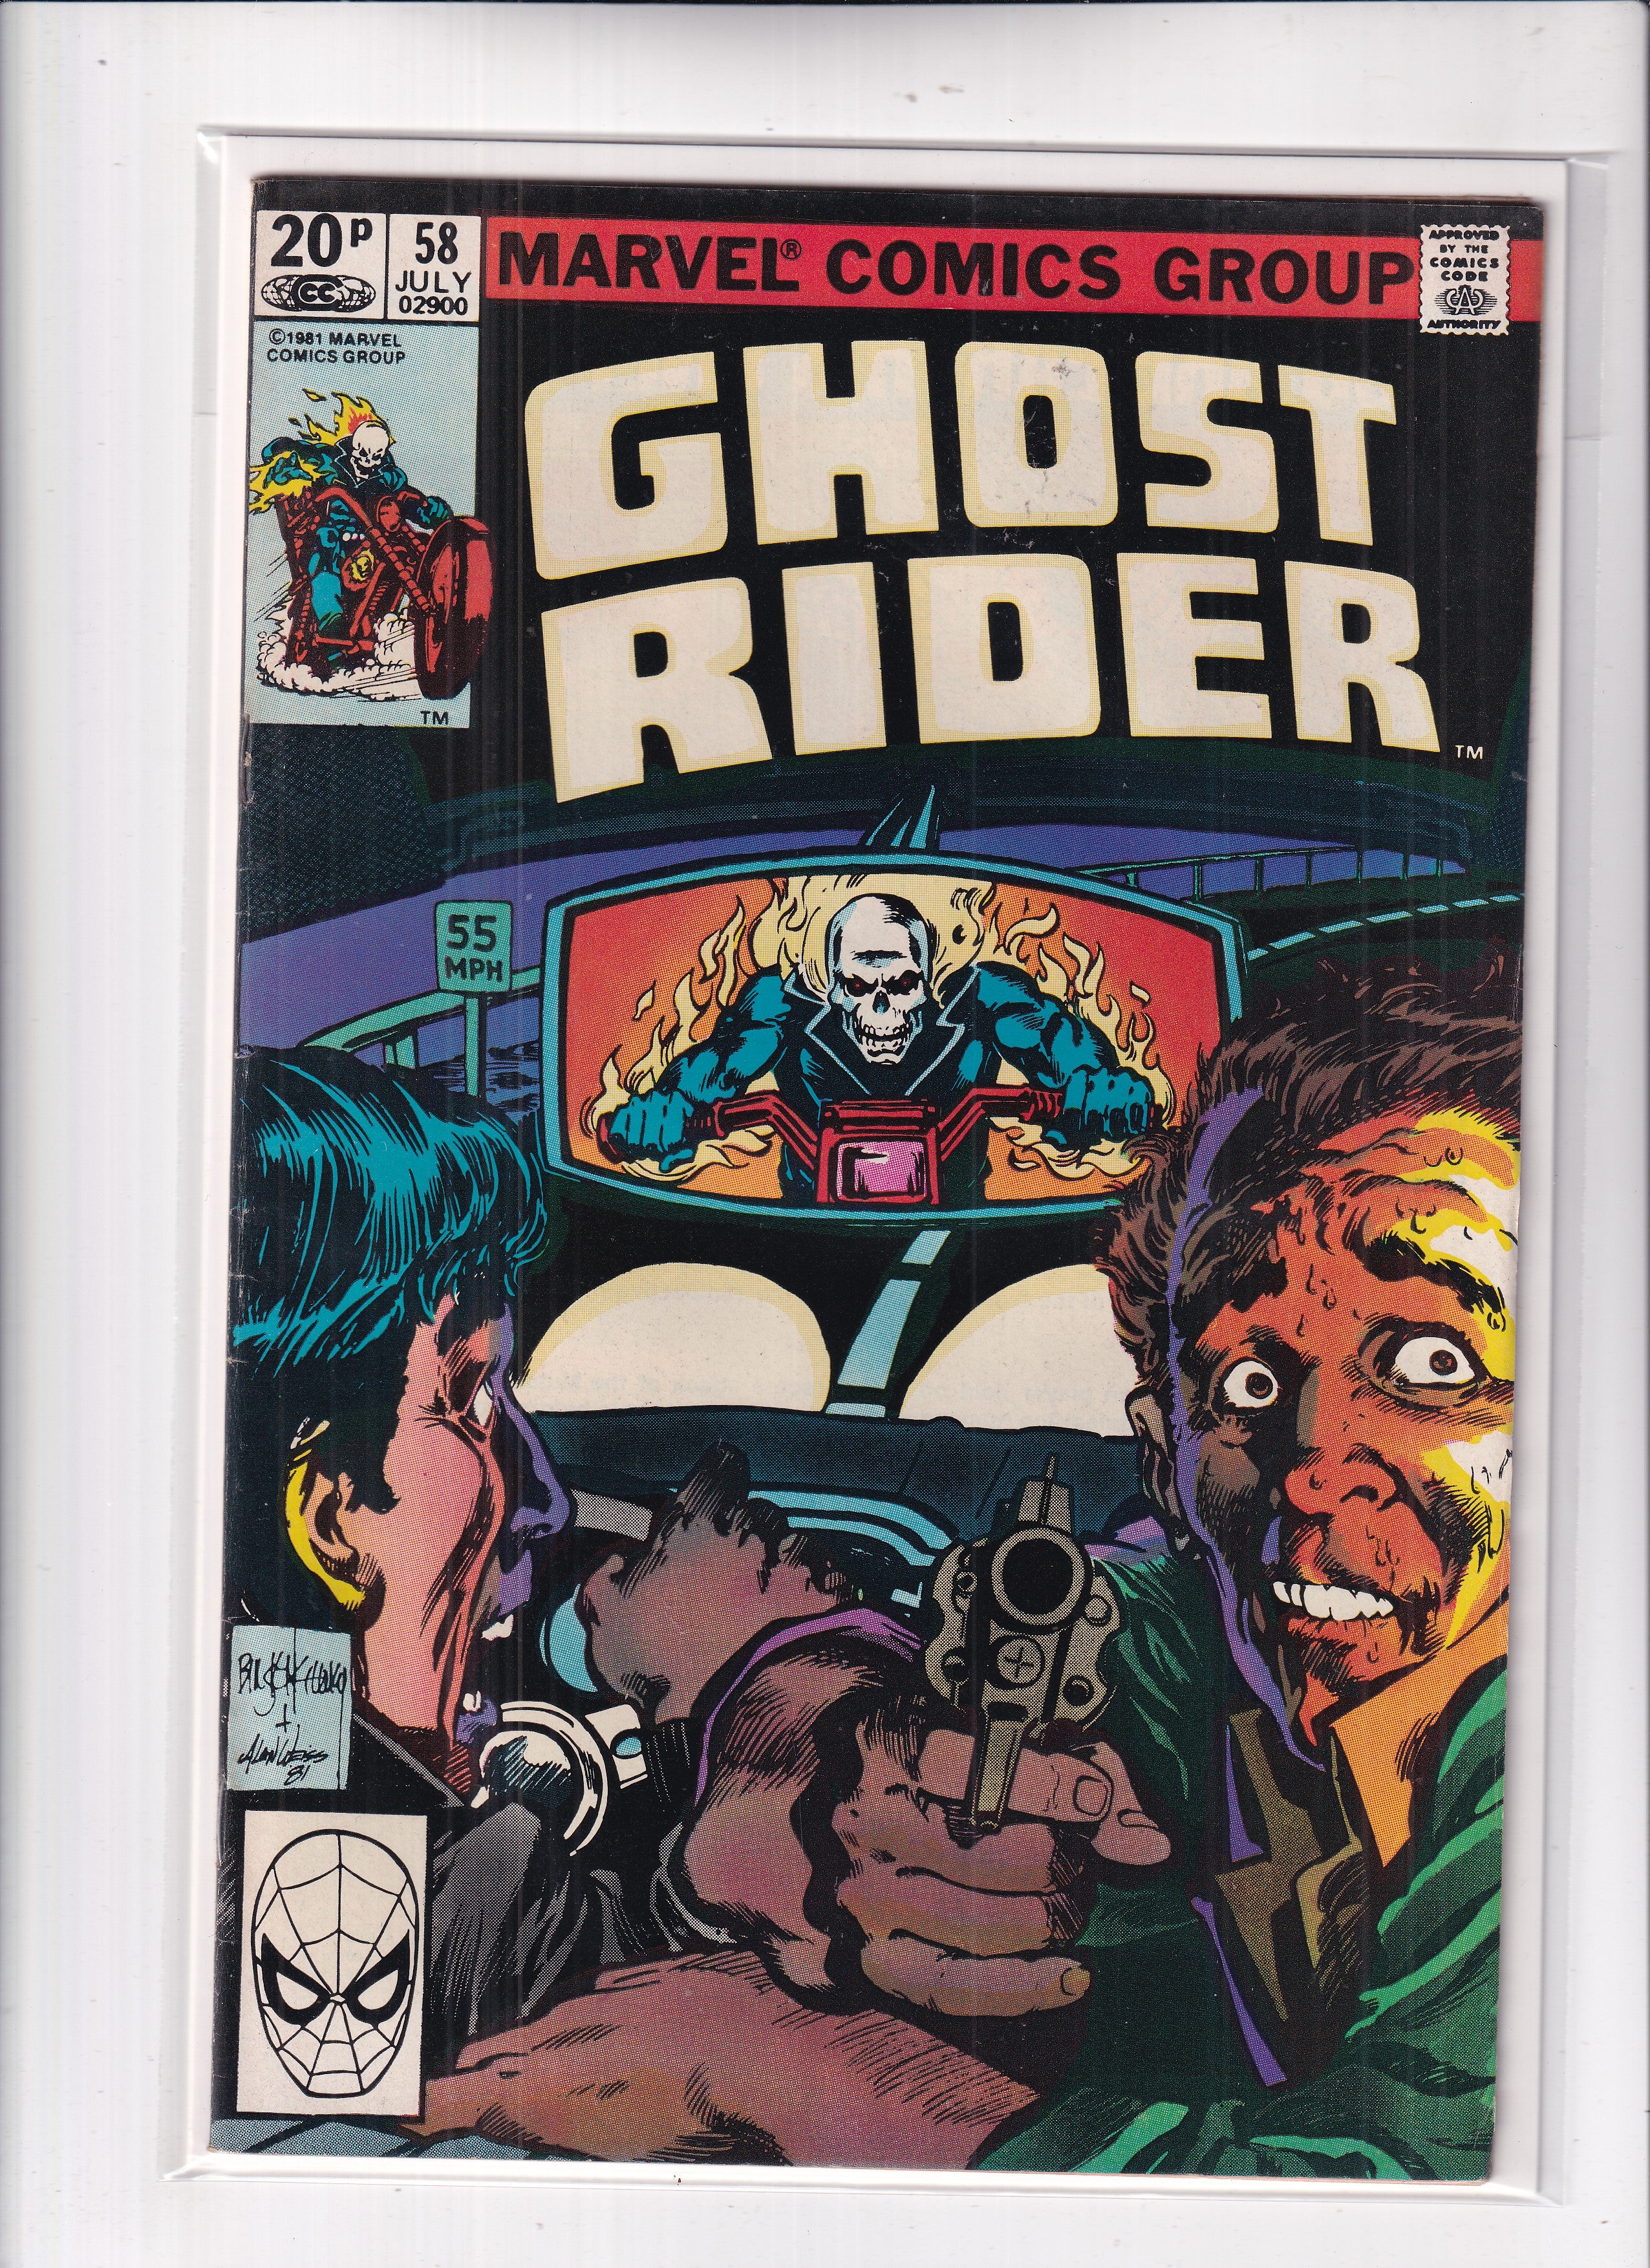 GHOST RIDER #58 - Slab City Comics 